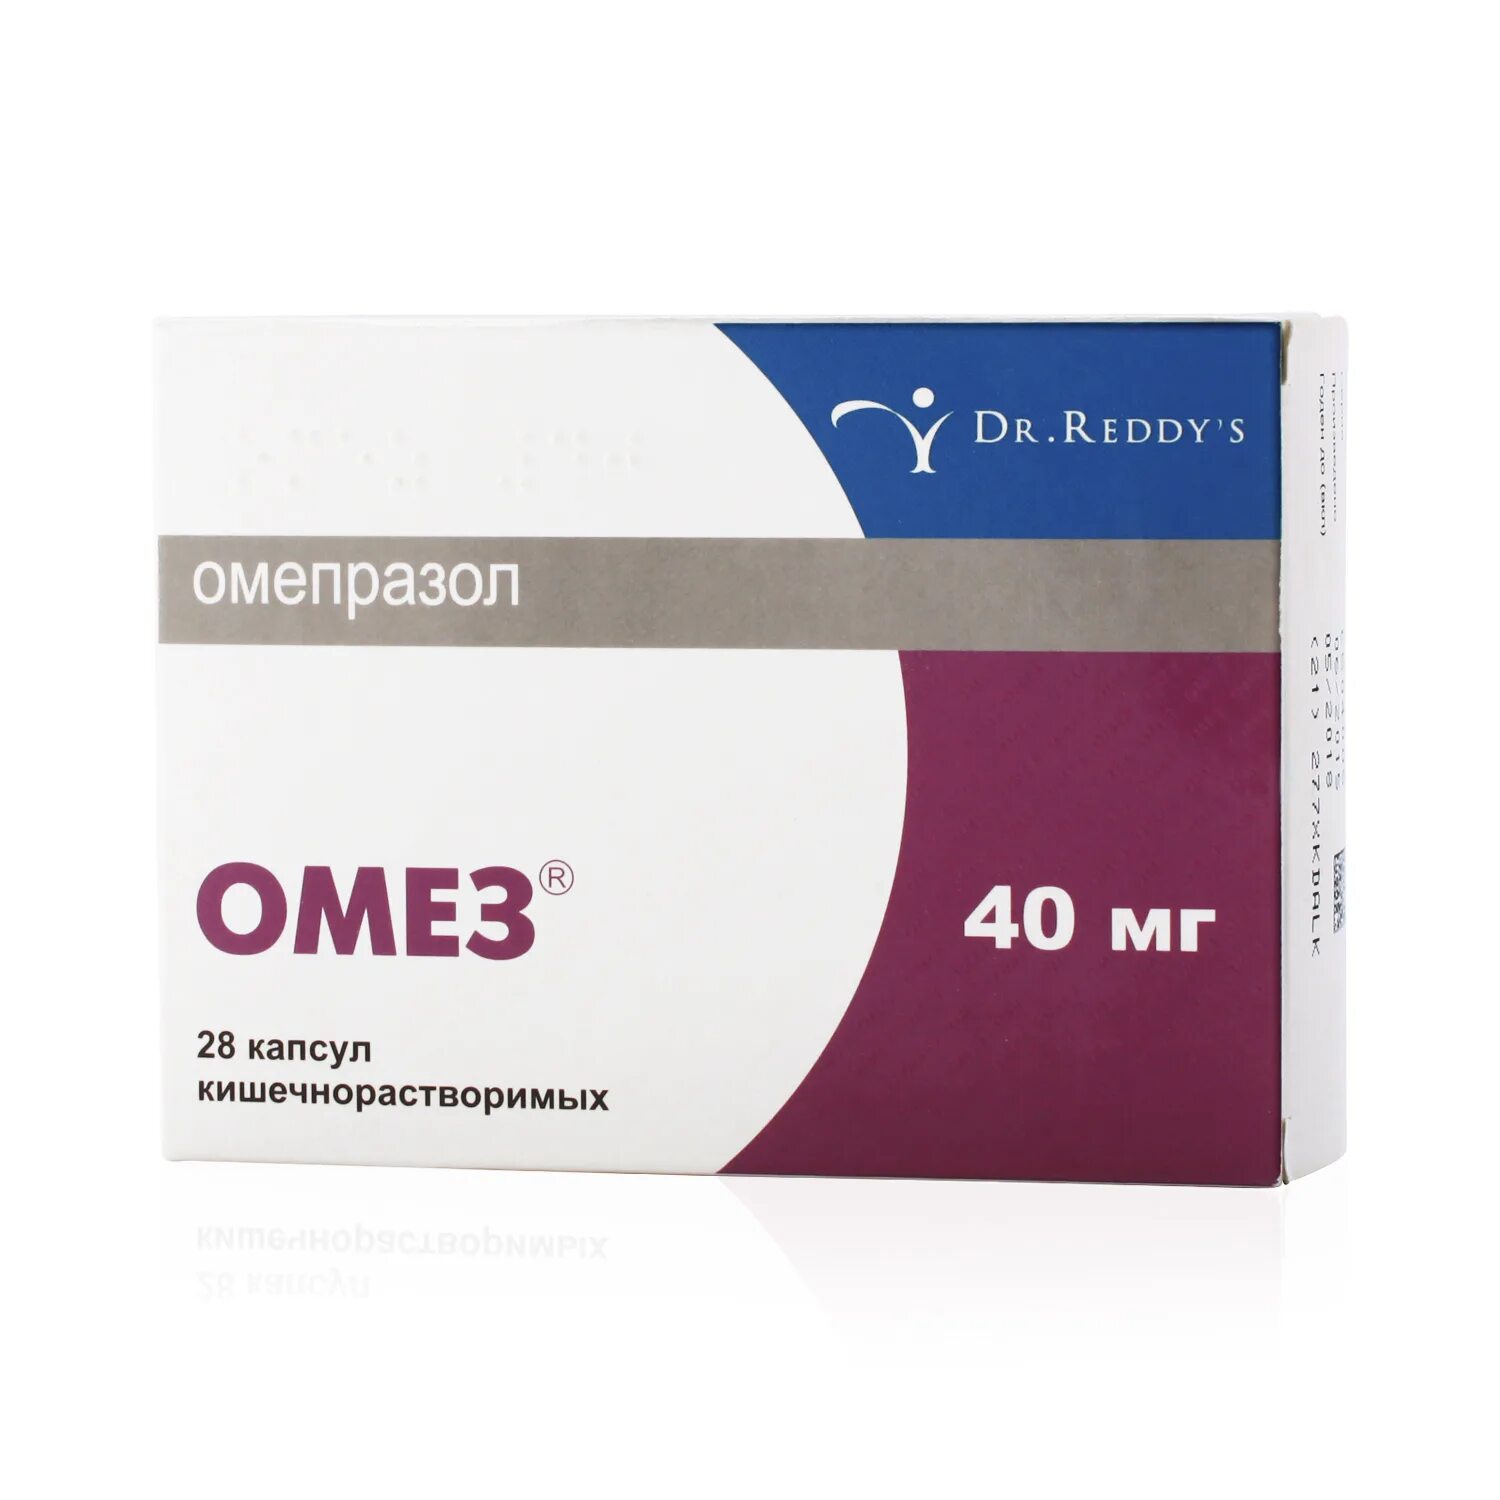 Омез капс 40мг n28. Омез Омепразол 20 мг. Омез капсулы кишечнорастворимые. Омепразол 40мг ФАРМАКЛАБ.